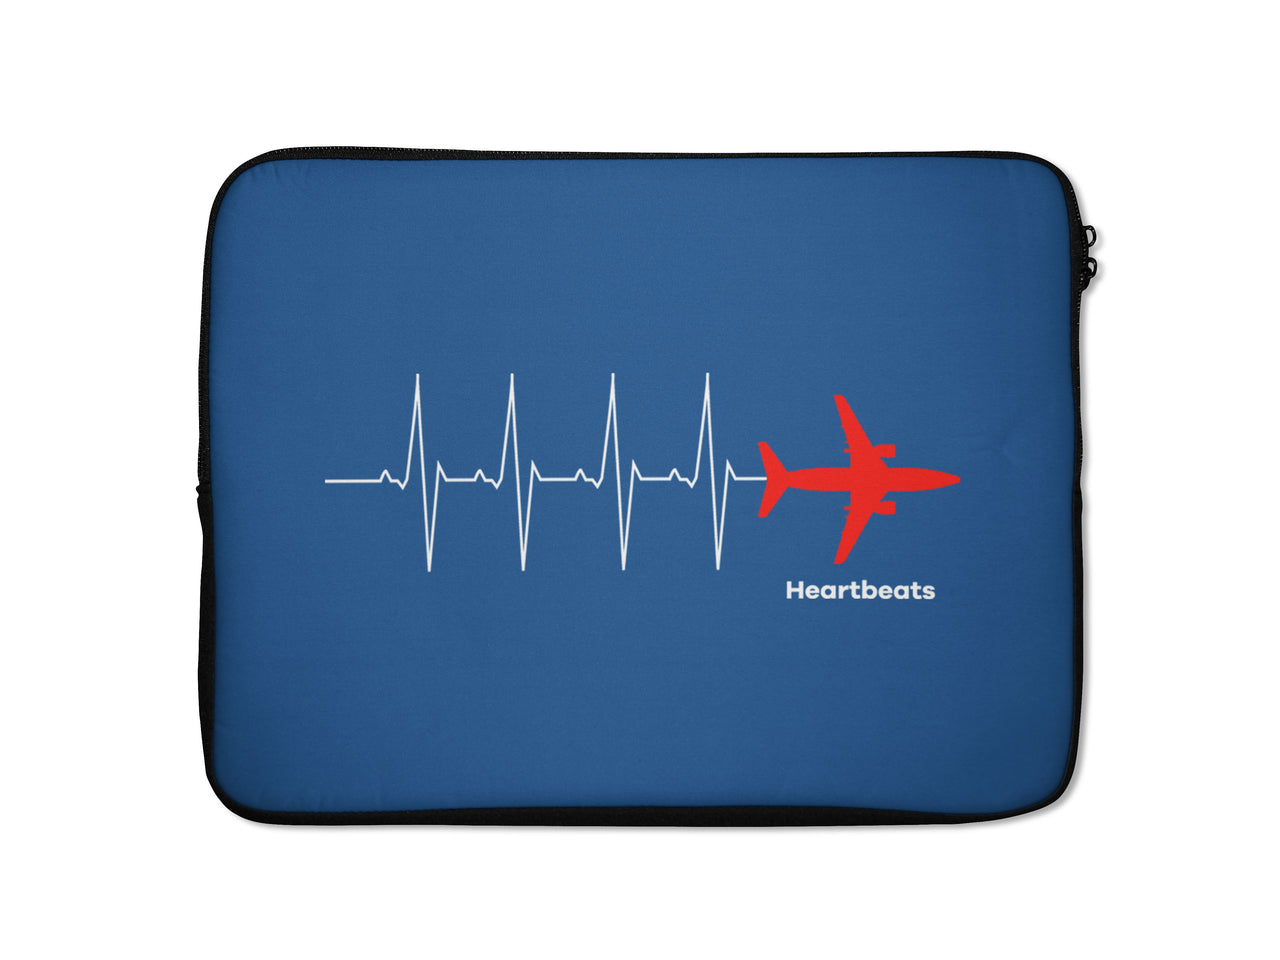 Aviation Heartbeats Designed Laptop & Tablet Cases